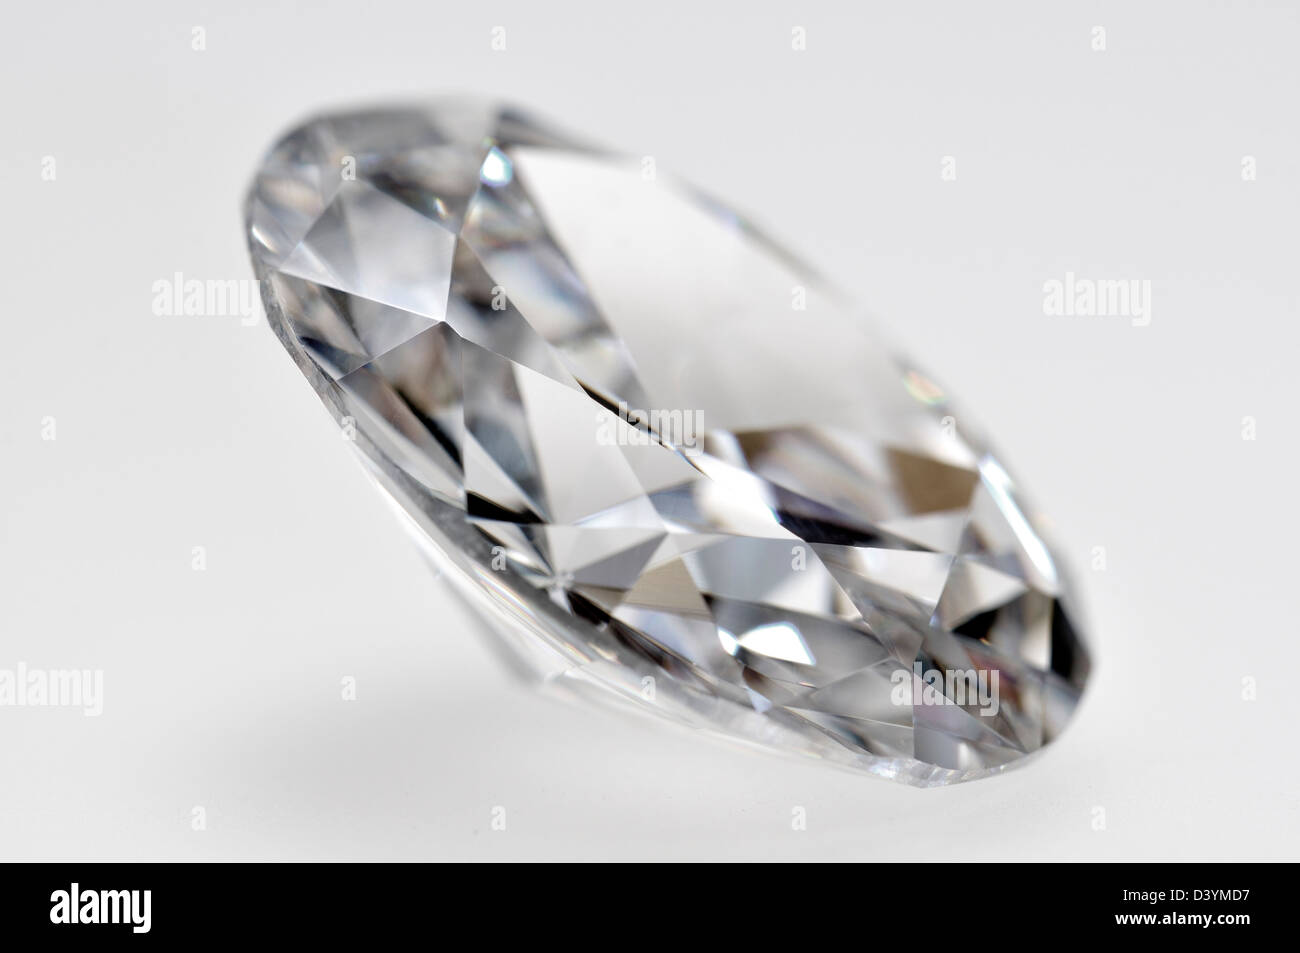 Oval-Schliff-Diamanten (synthetisch - Cubic Zirkonia) Stockfoto